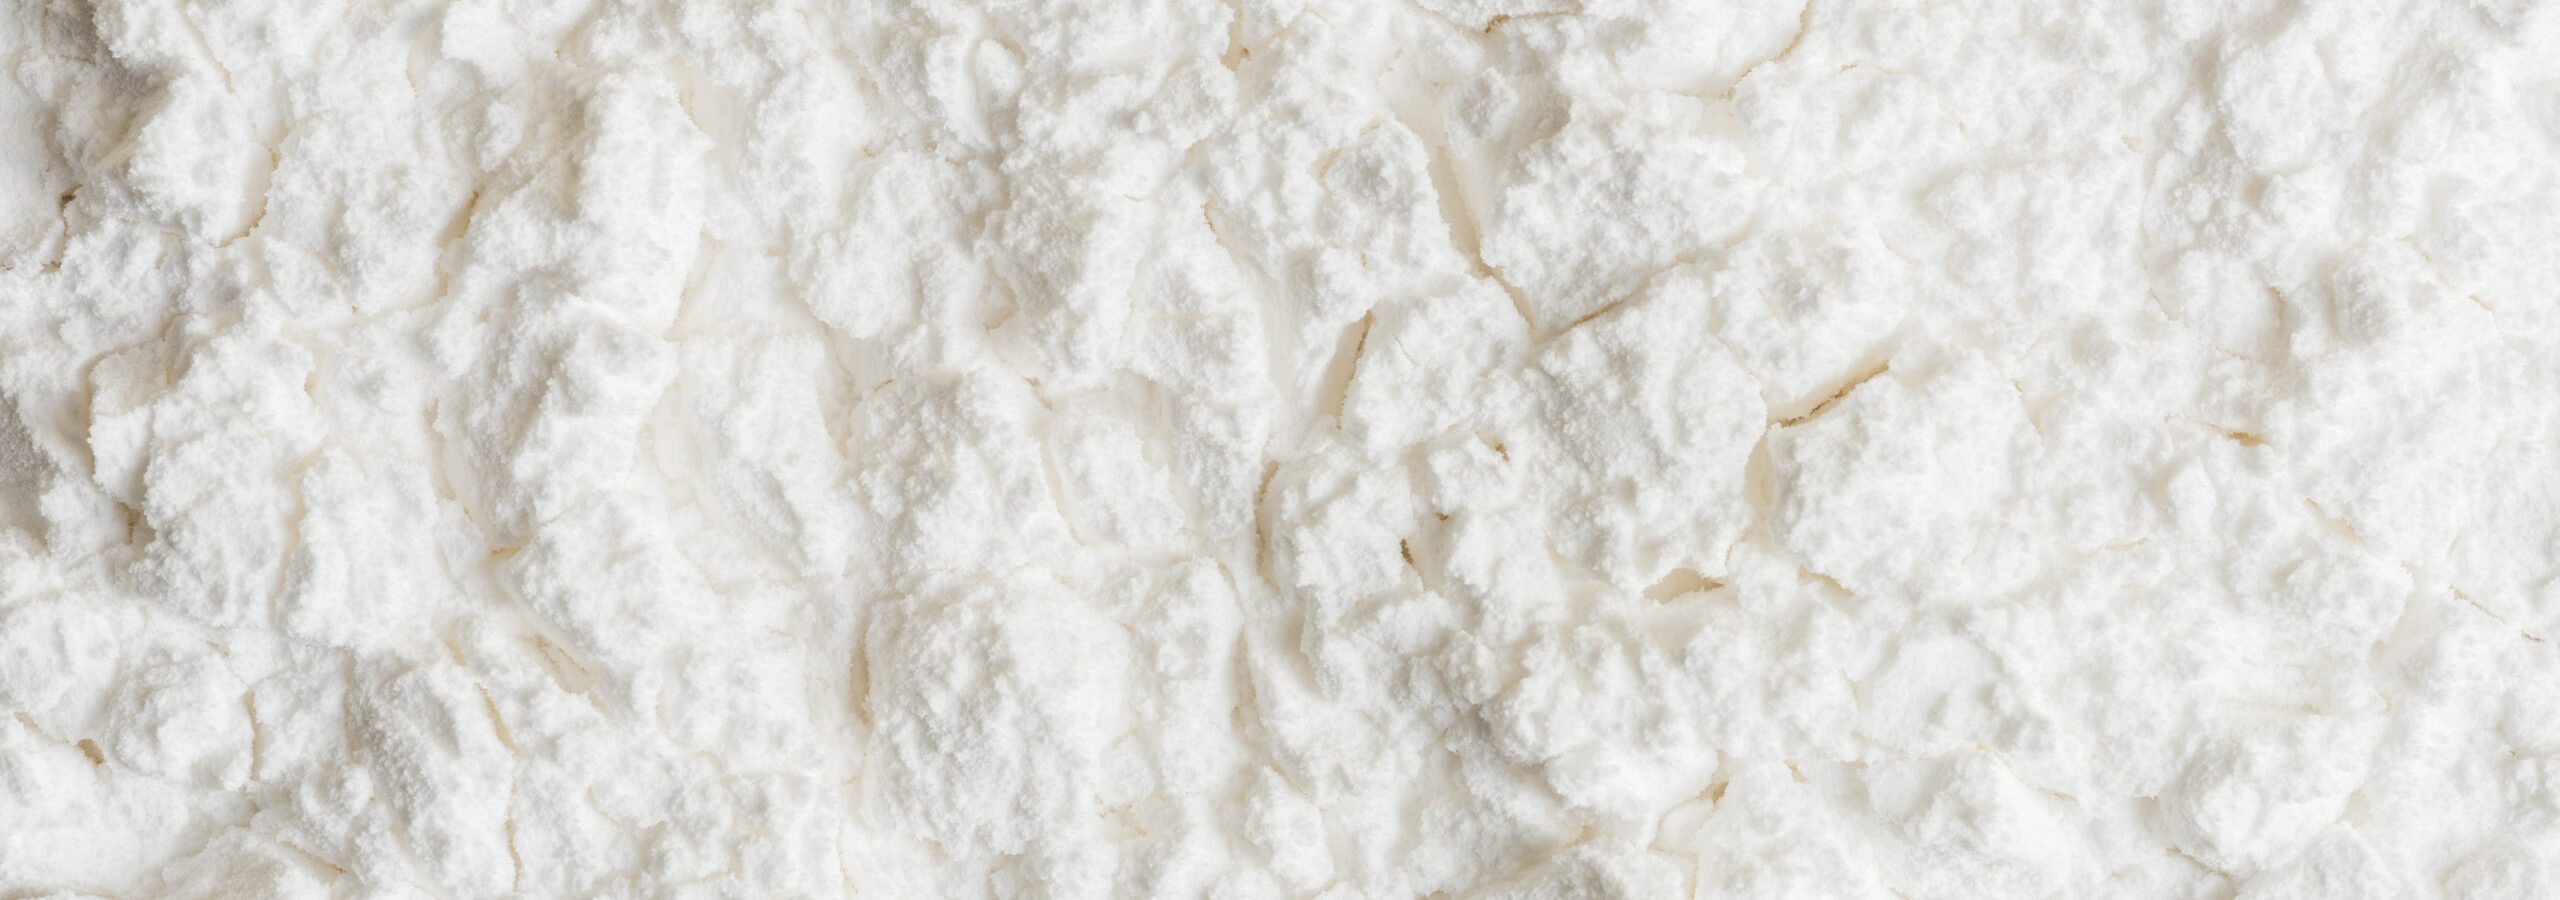 Plain white powder texture background